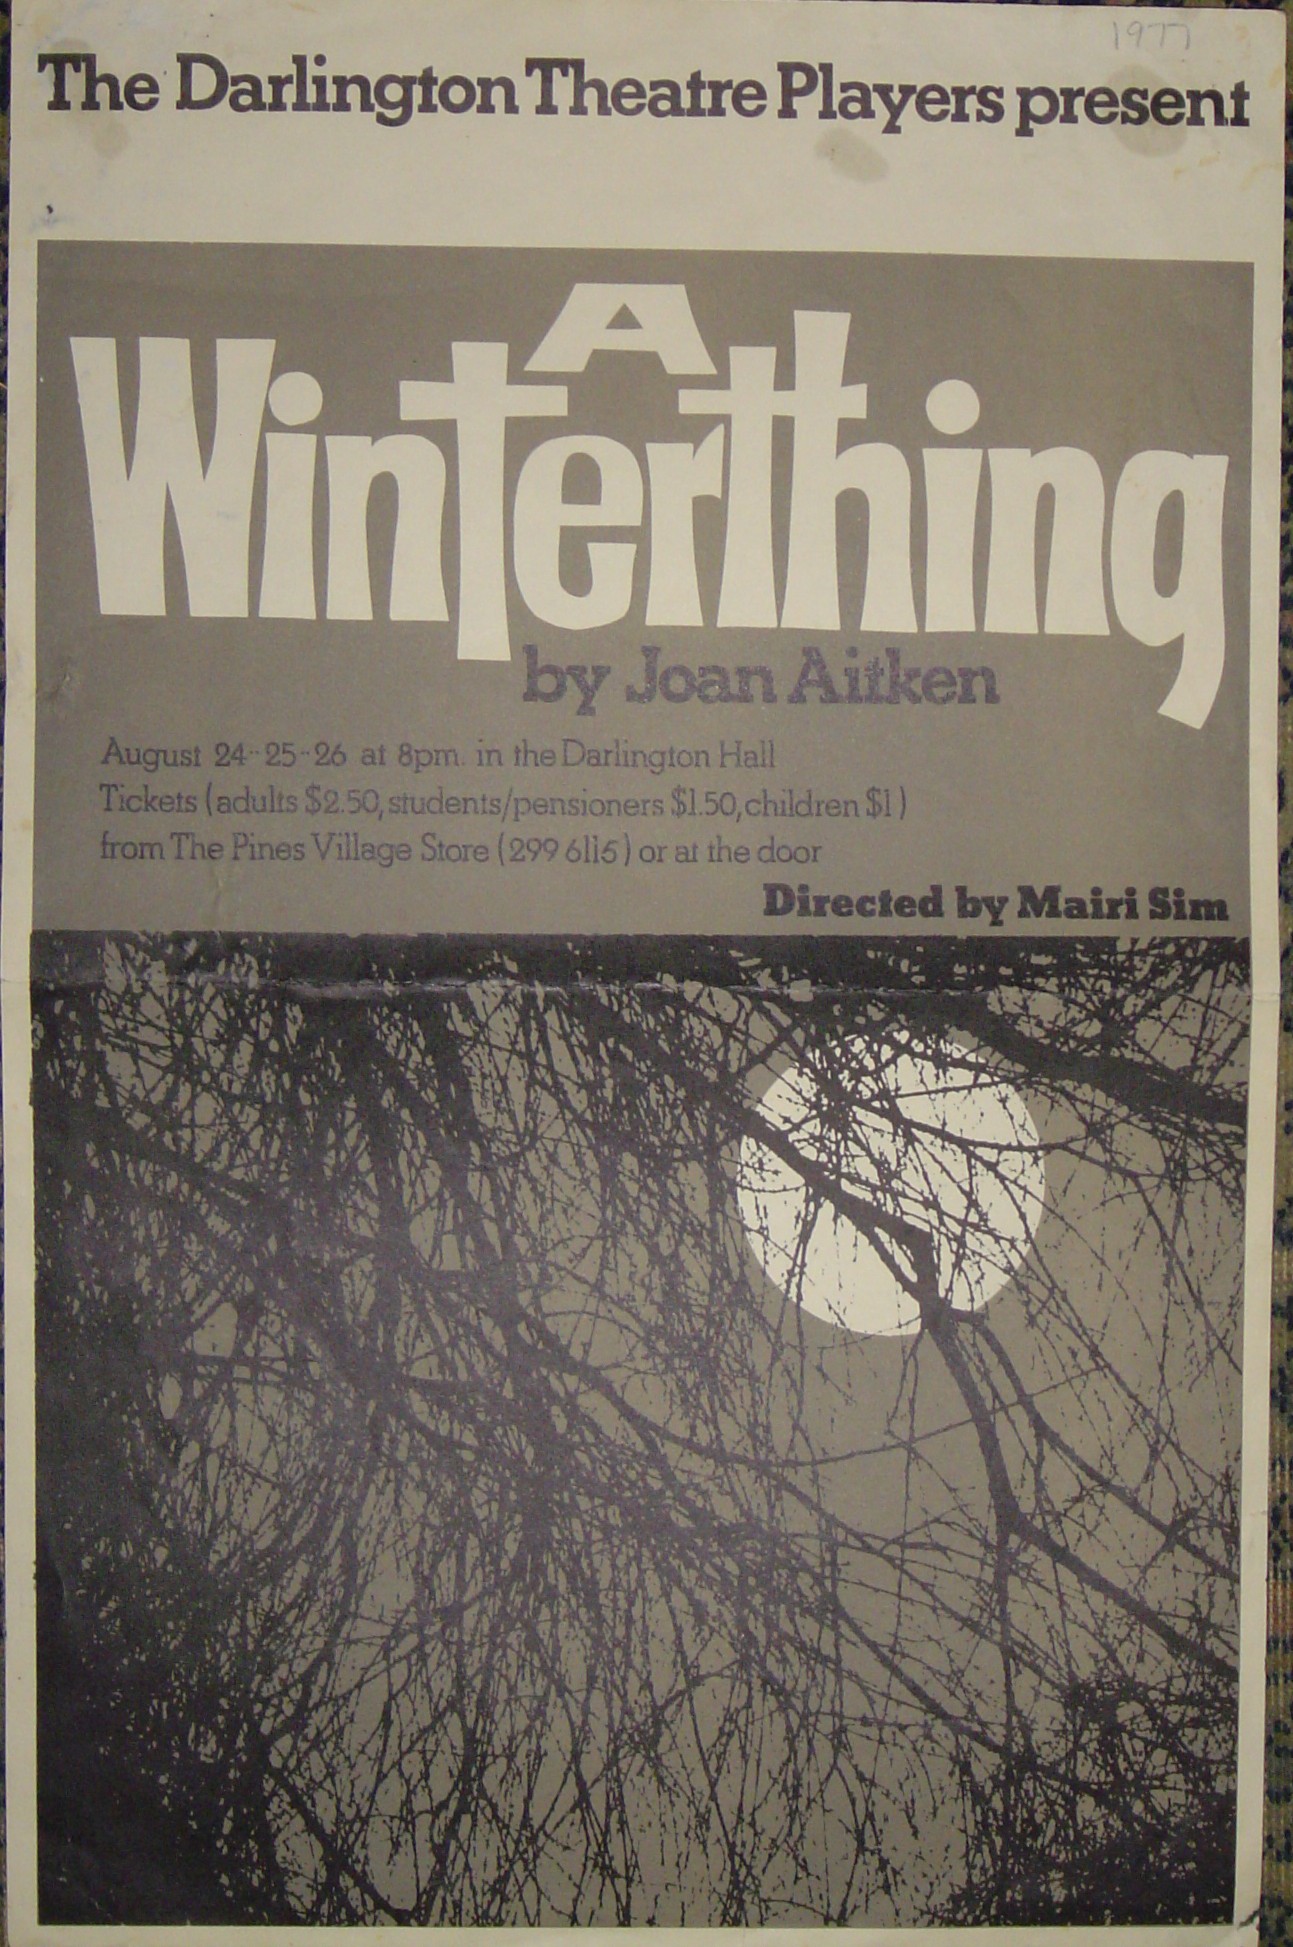 A Winterthing